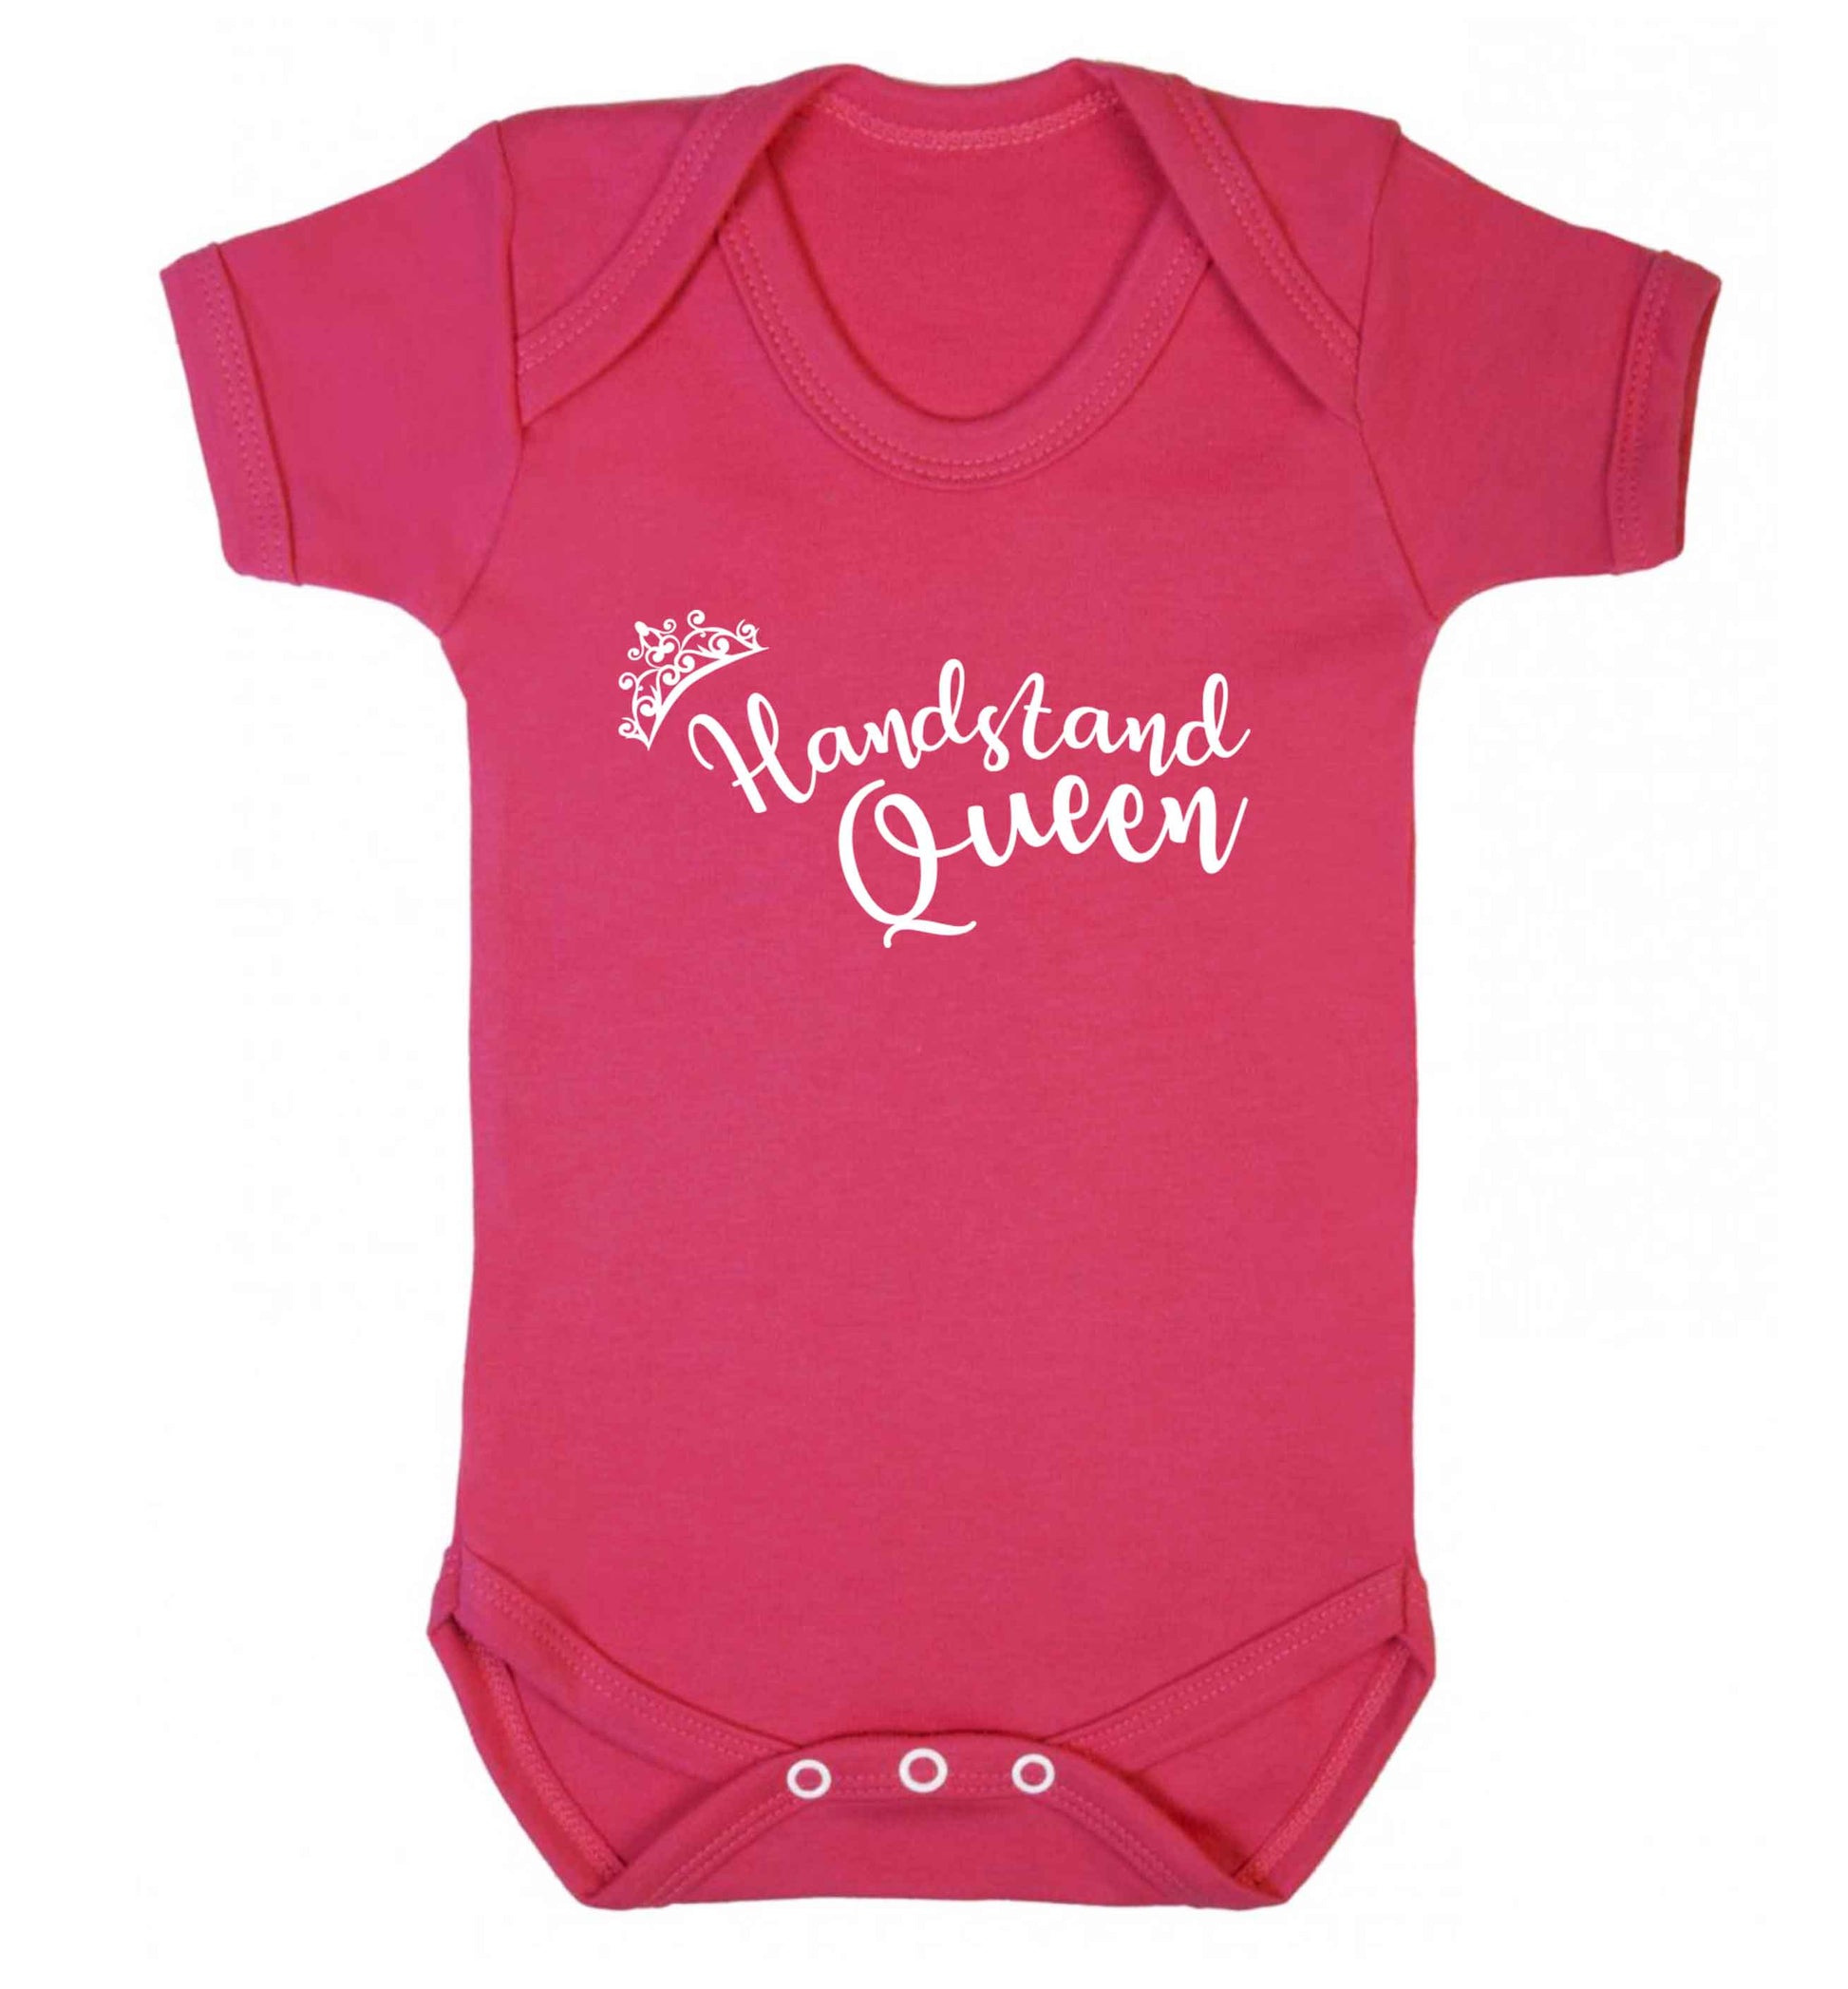 Handstand Queen Baby Vest dark pink 18-24 months